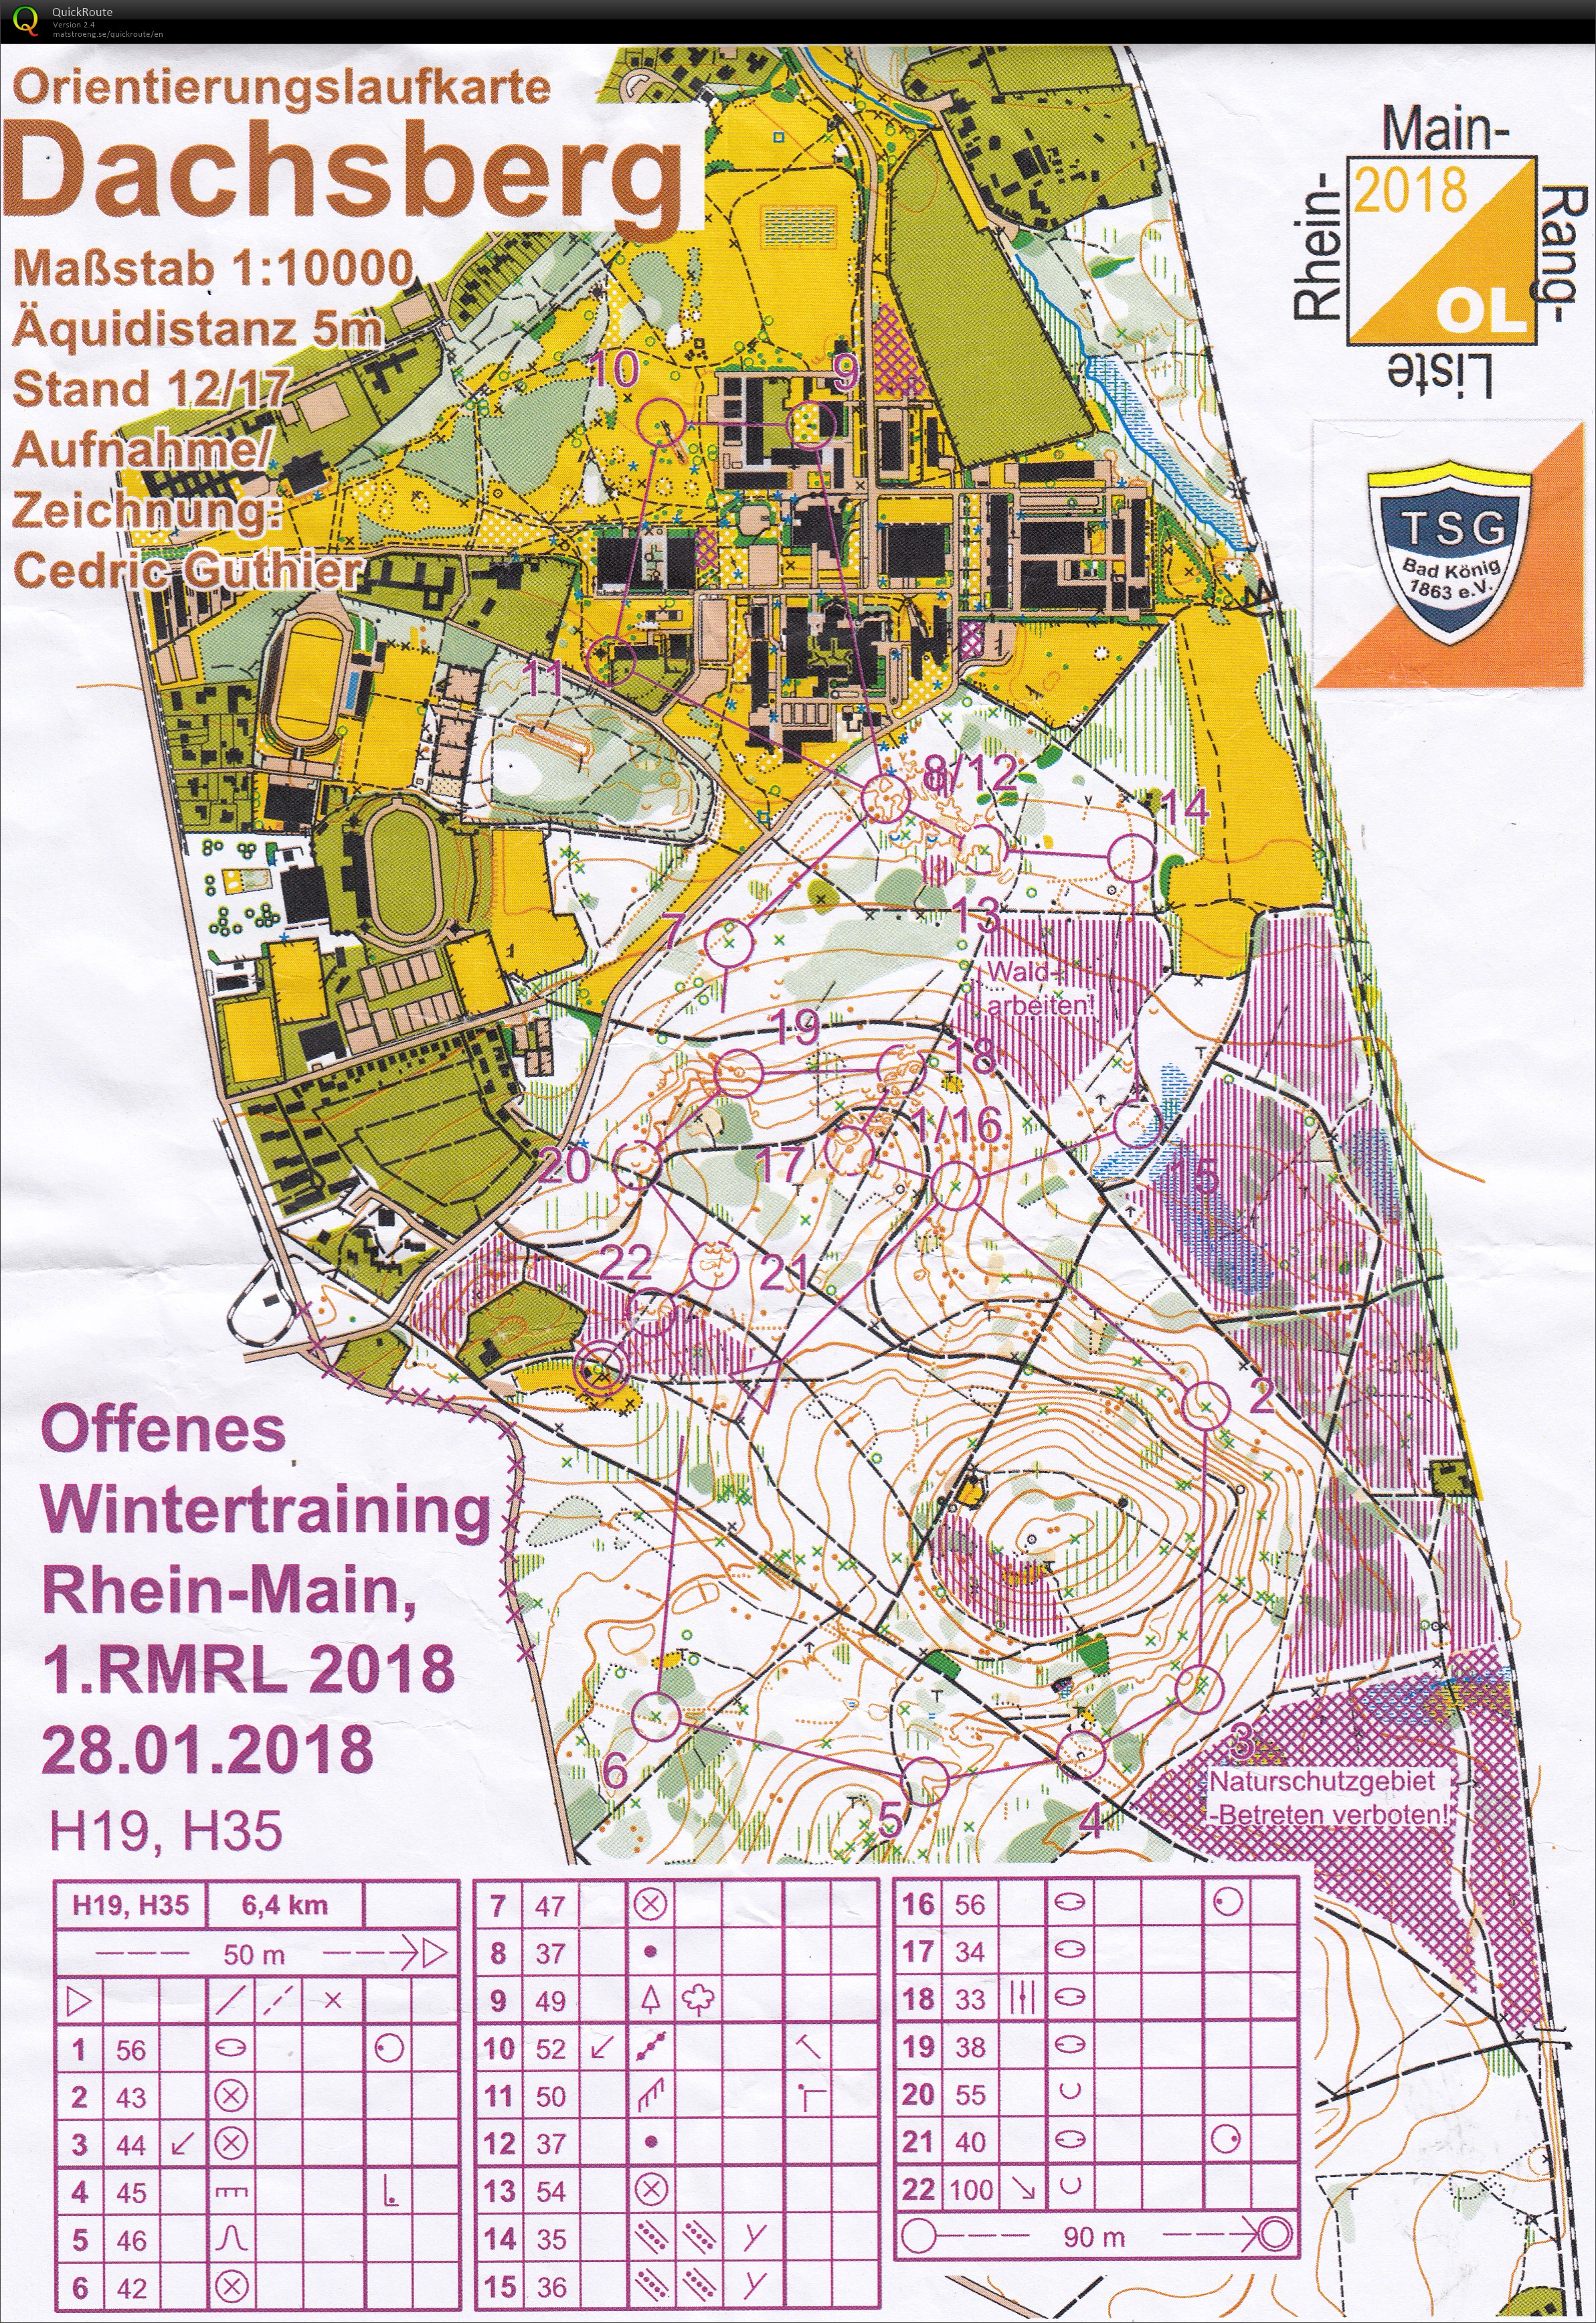 Open winter training / Rhein-Main ranking event (28.01.2018)